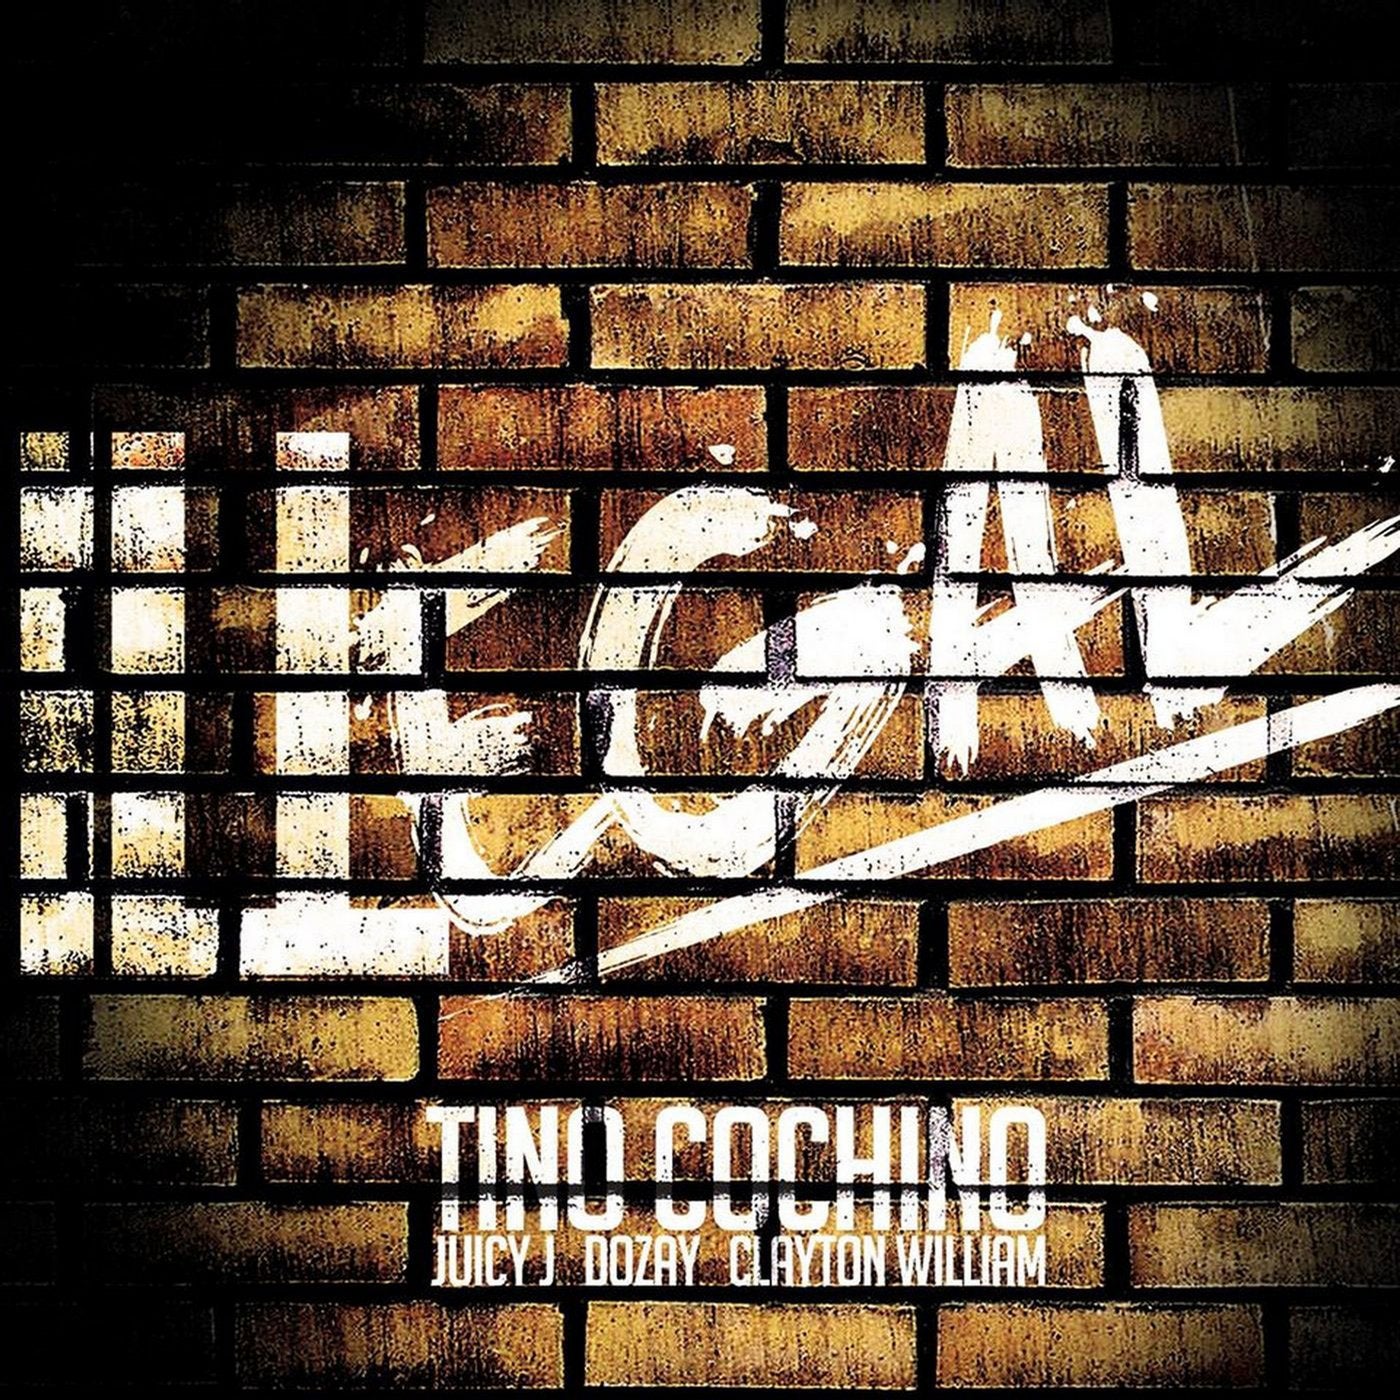 ILLegal (feat. Juicy J, Dozay & Clayton William)